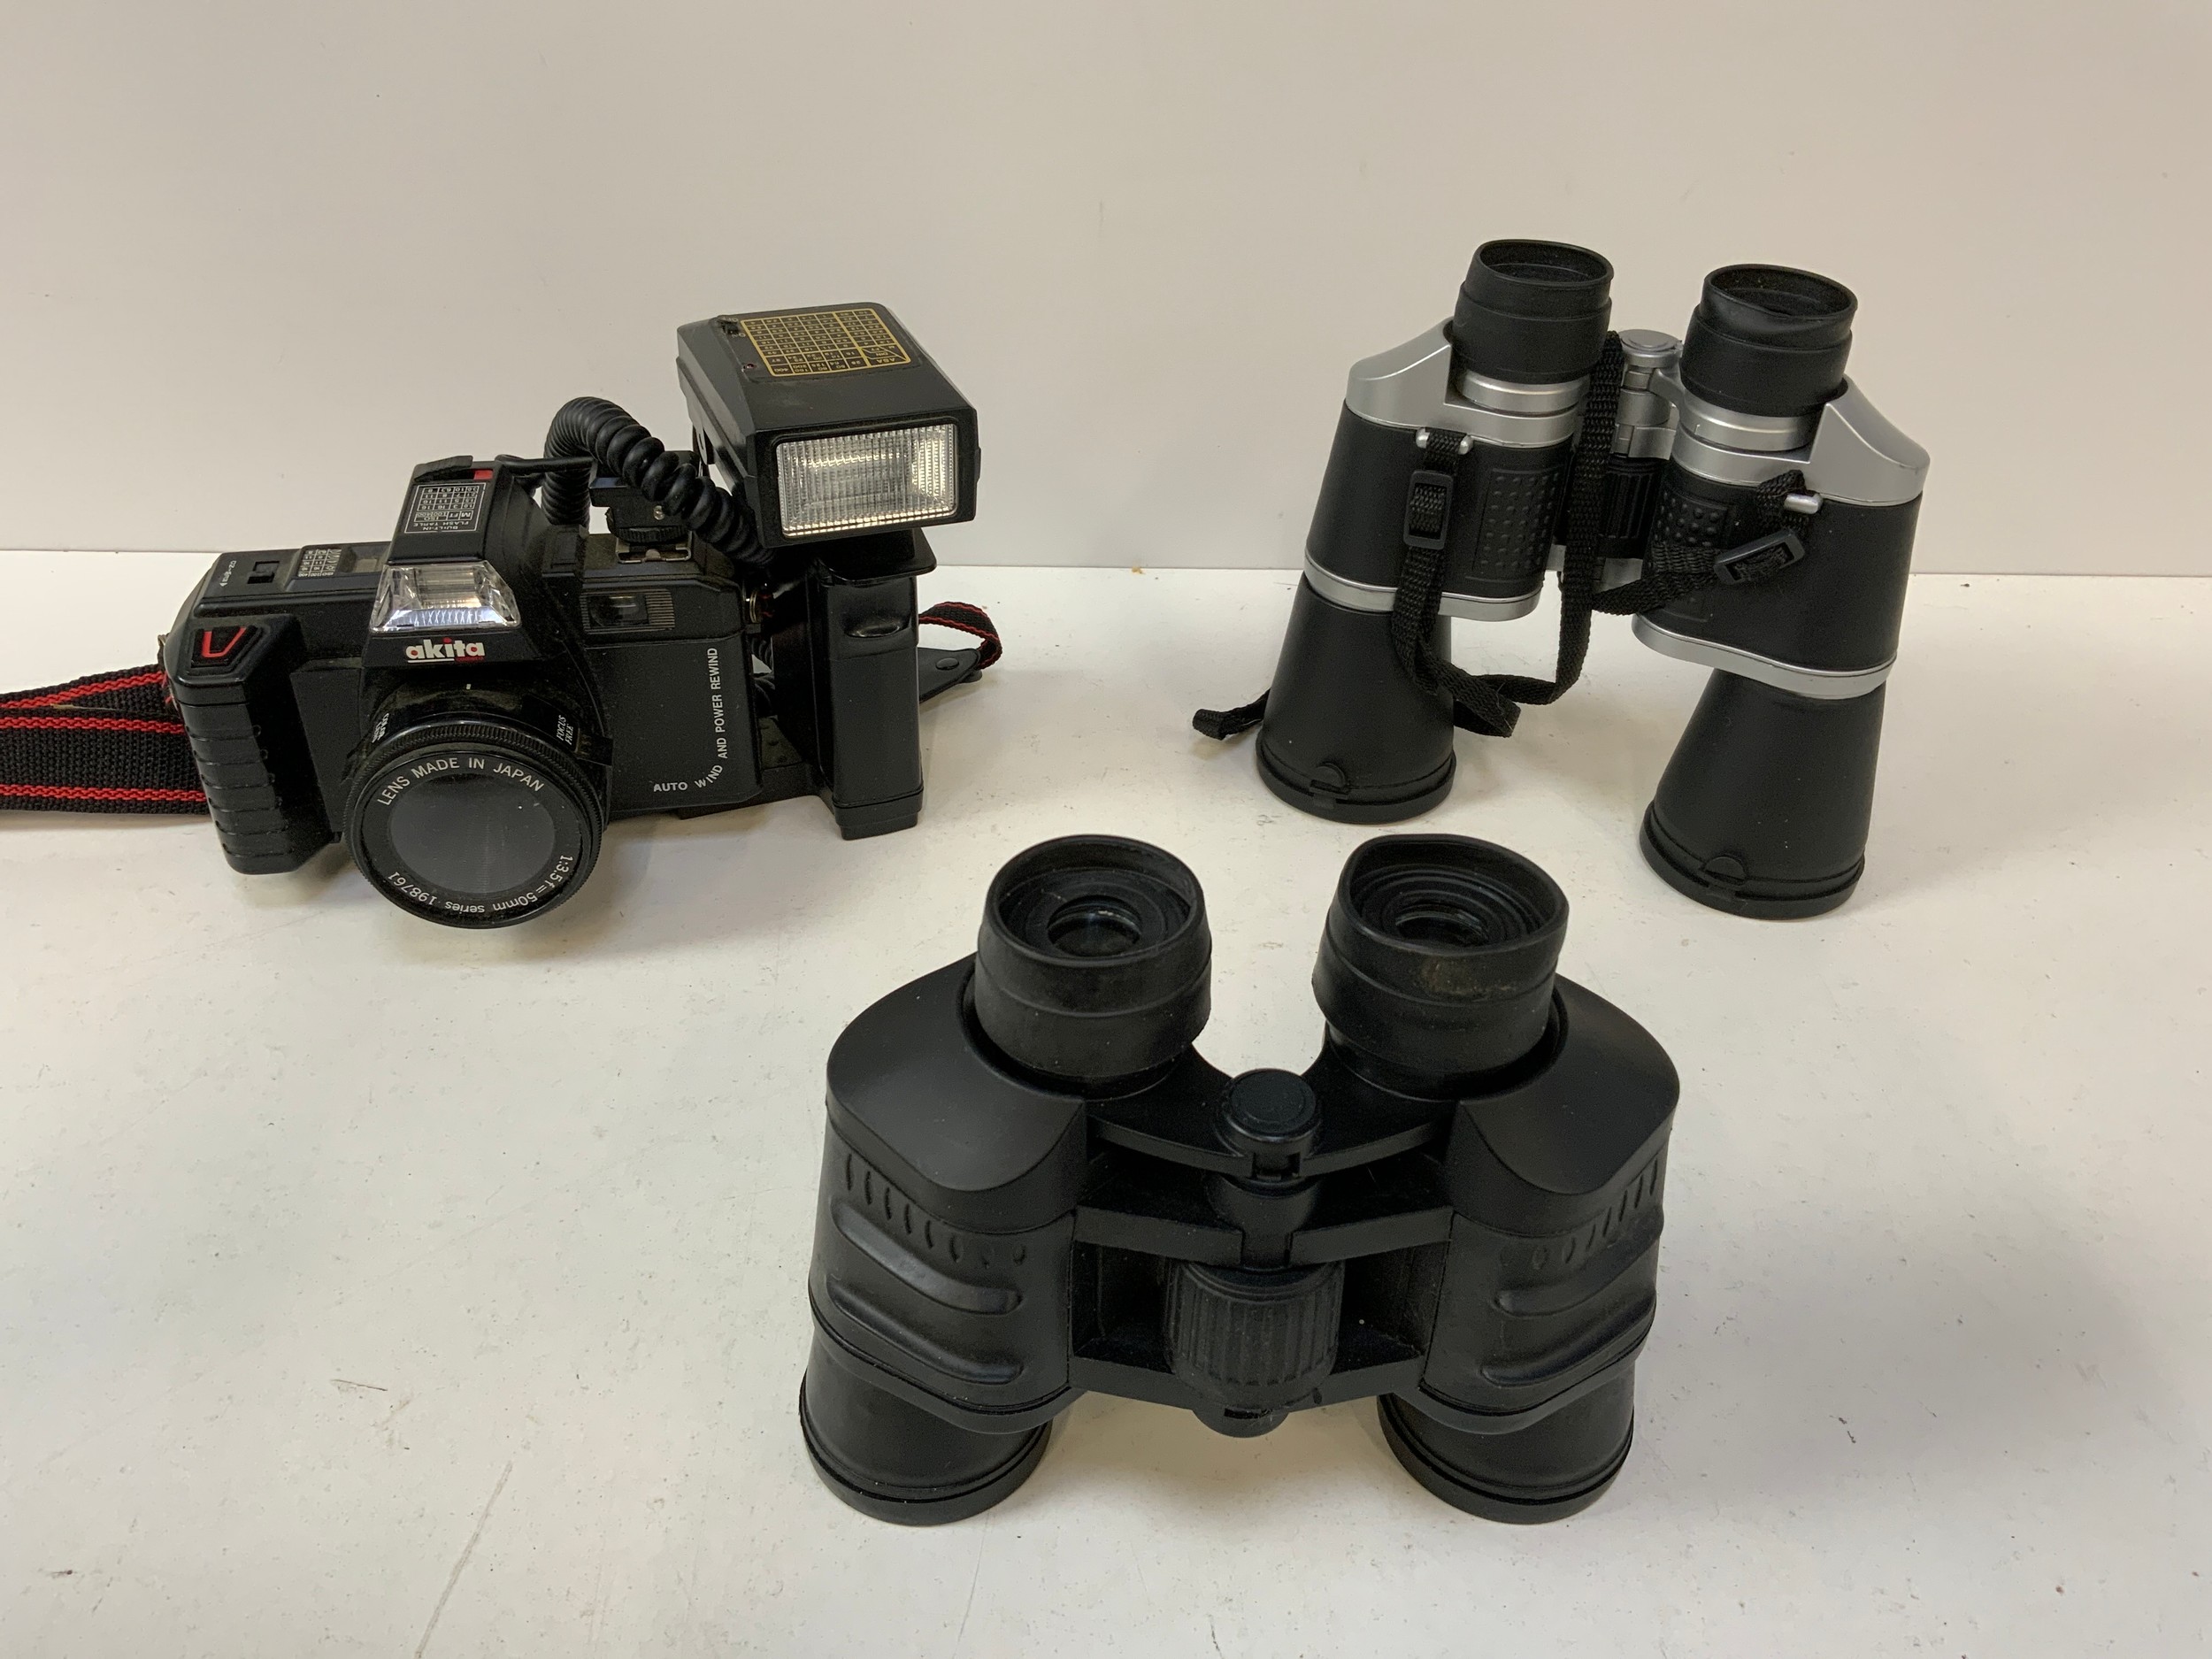 Akita Camera with Flash Gun and 2x Pairs of Binoculars